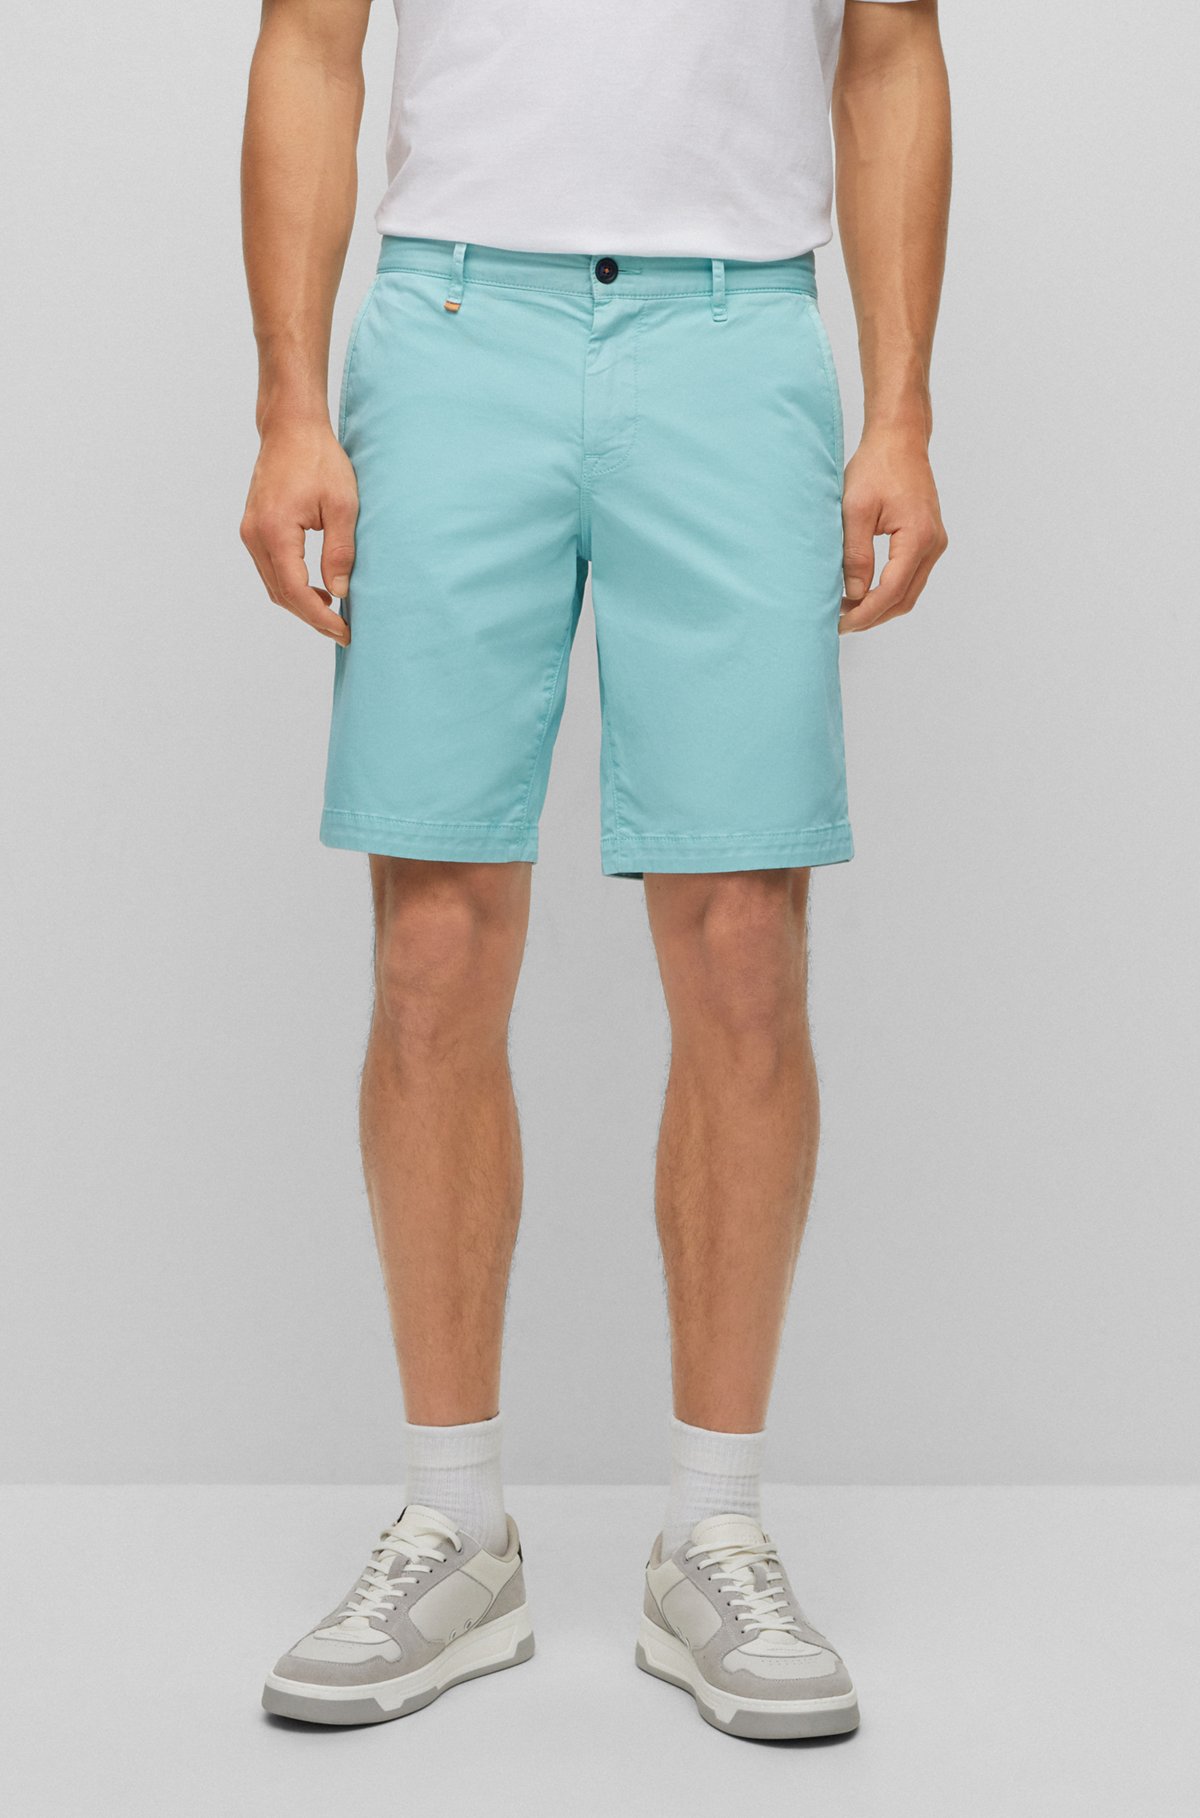 Slim-fit regular-rise shorts in stretch cotton, Light Blue